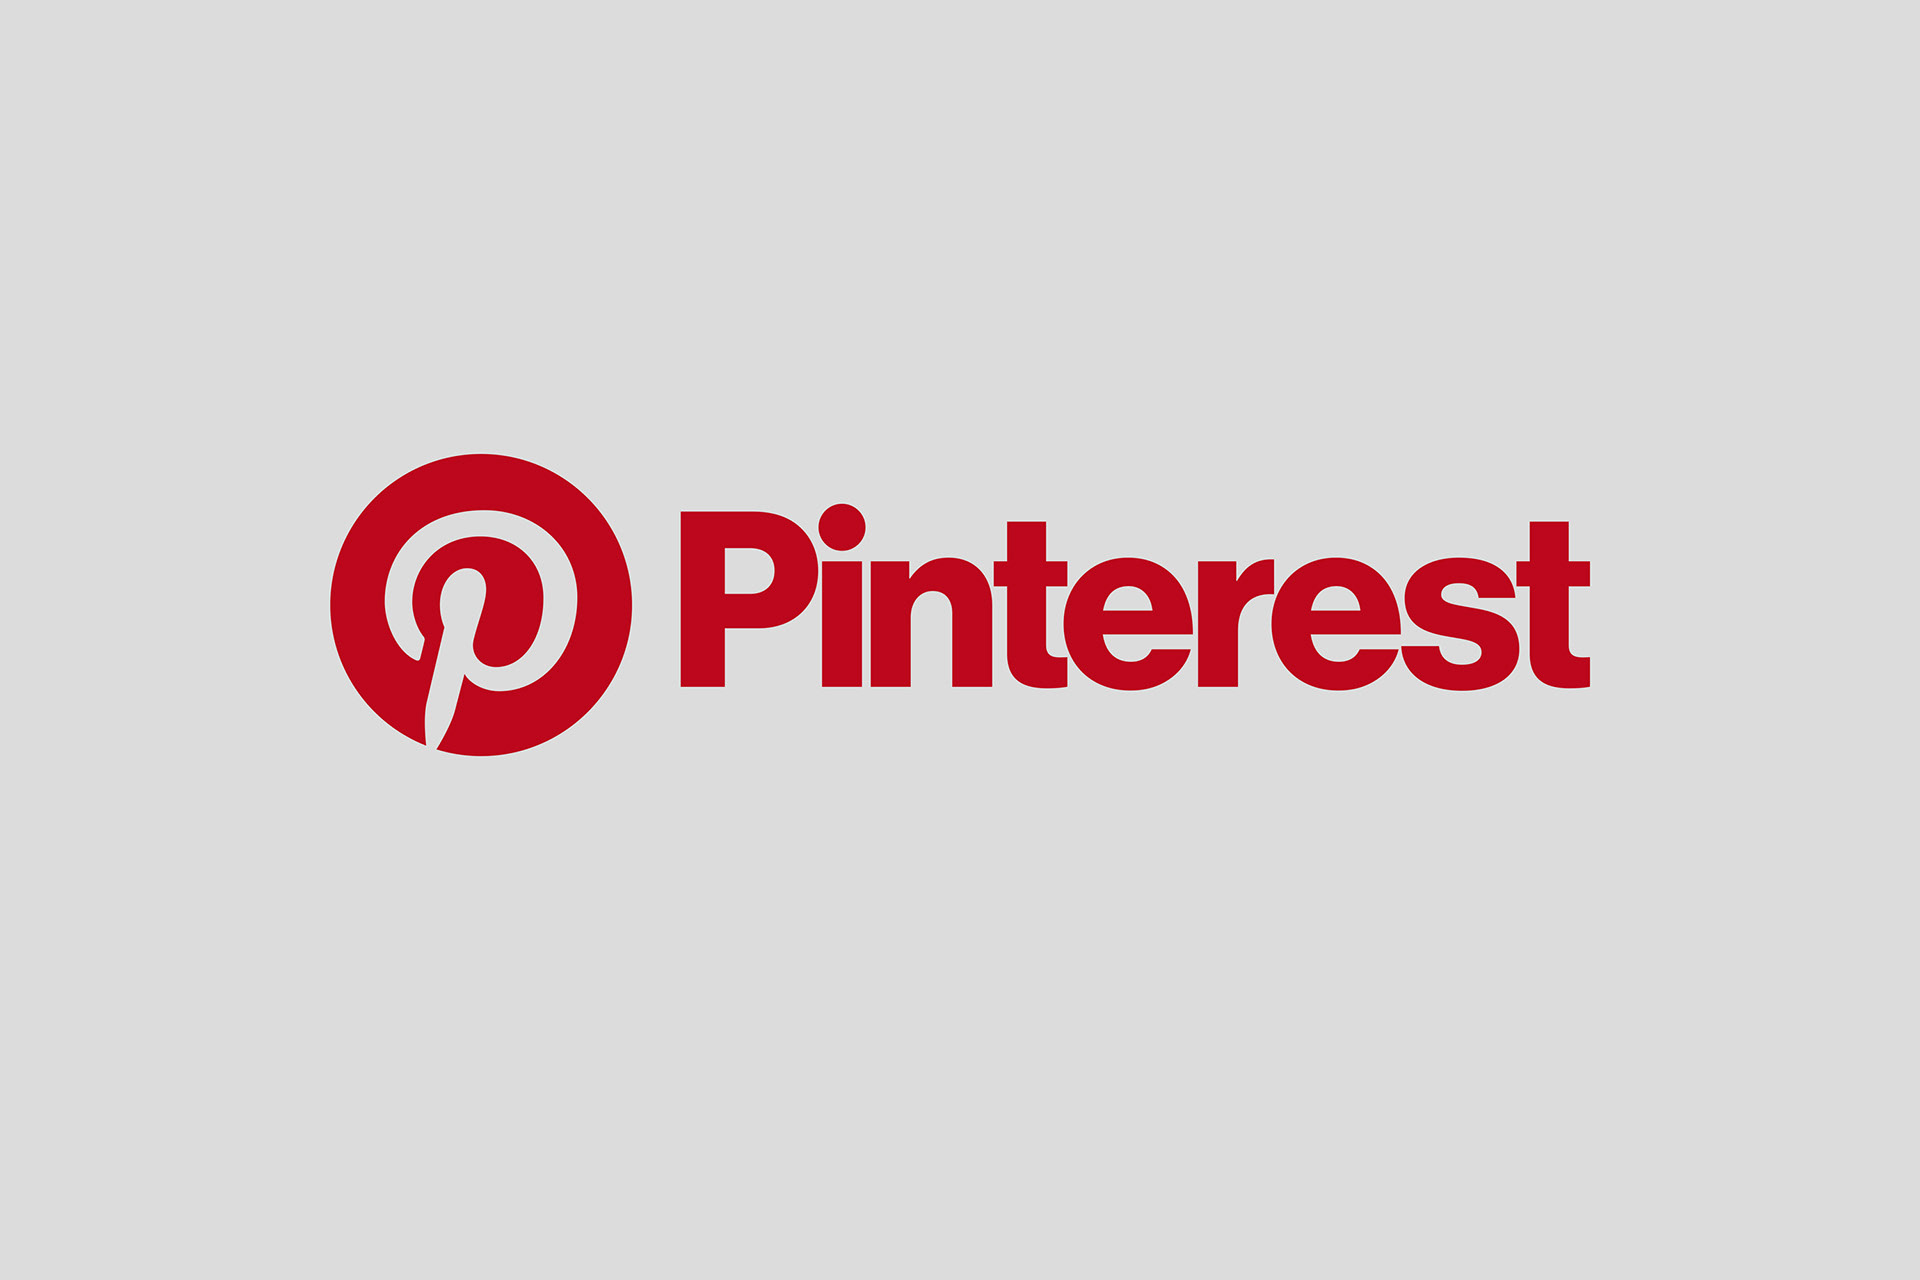 Refining Pinterest's Brand Design and Visual Identity